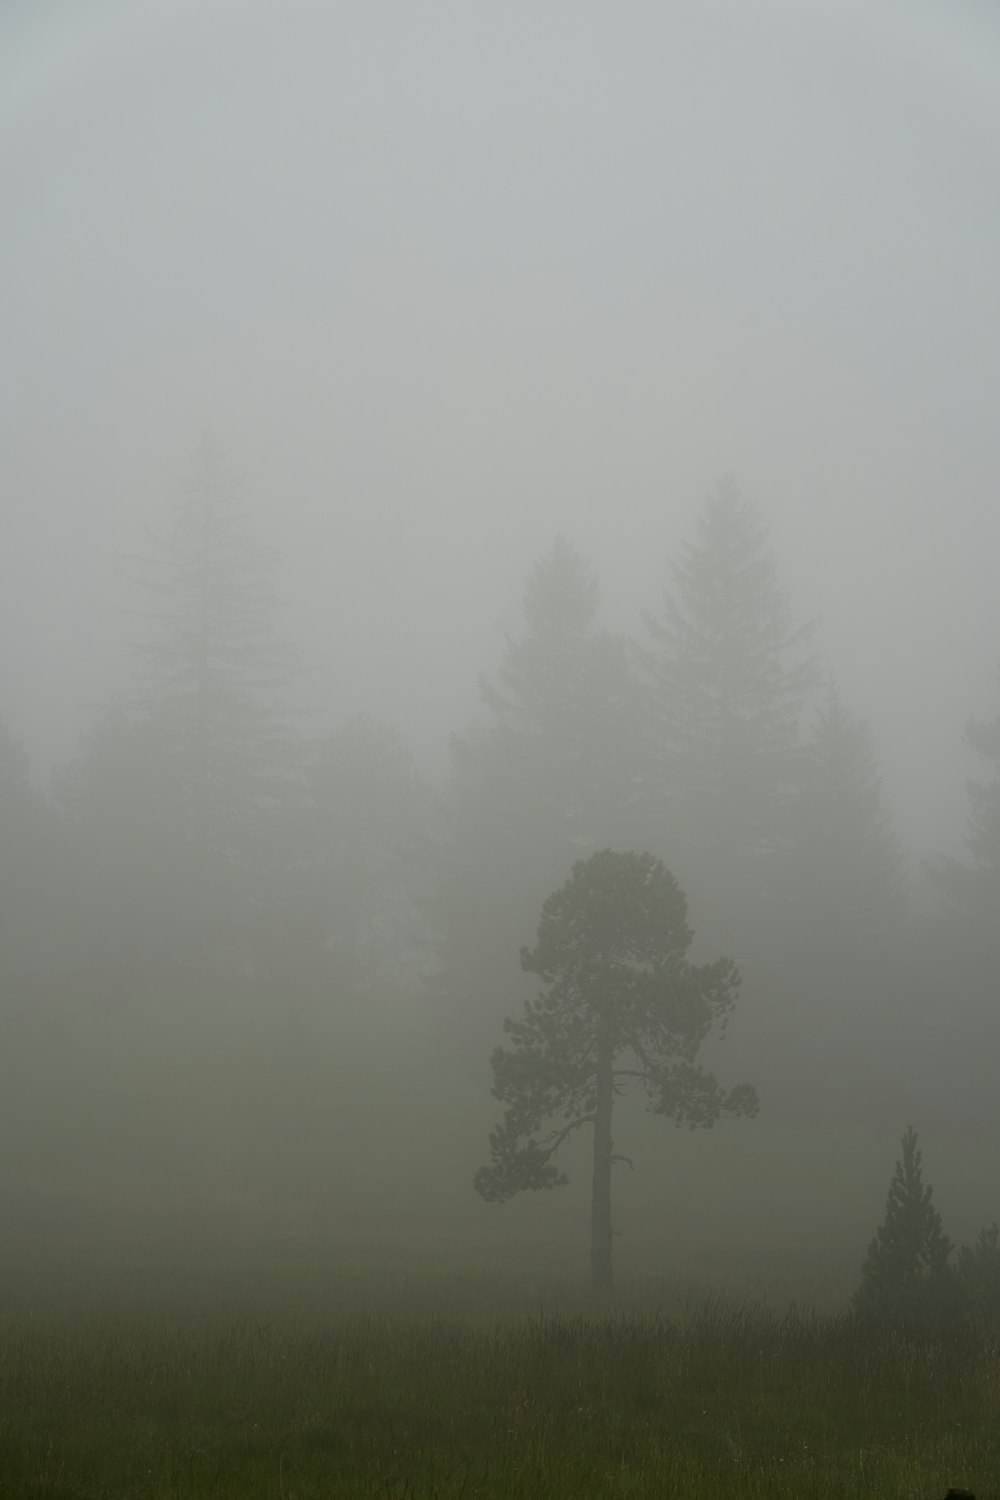 trees in a foggy field